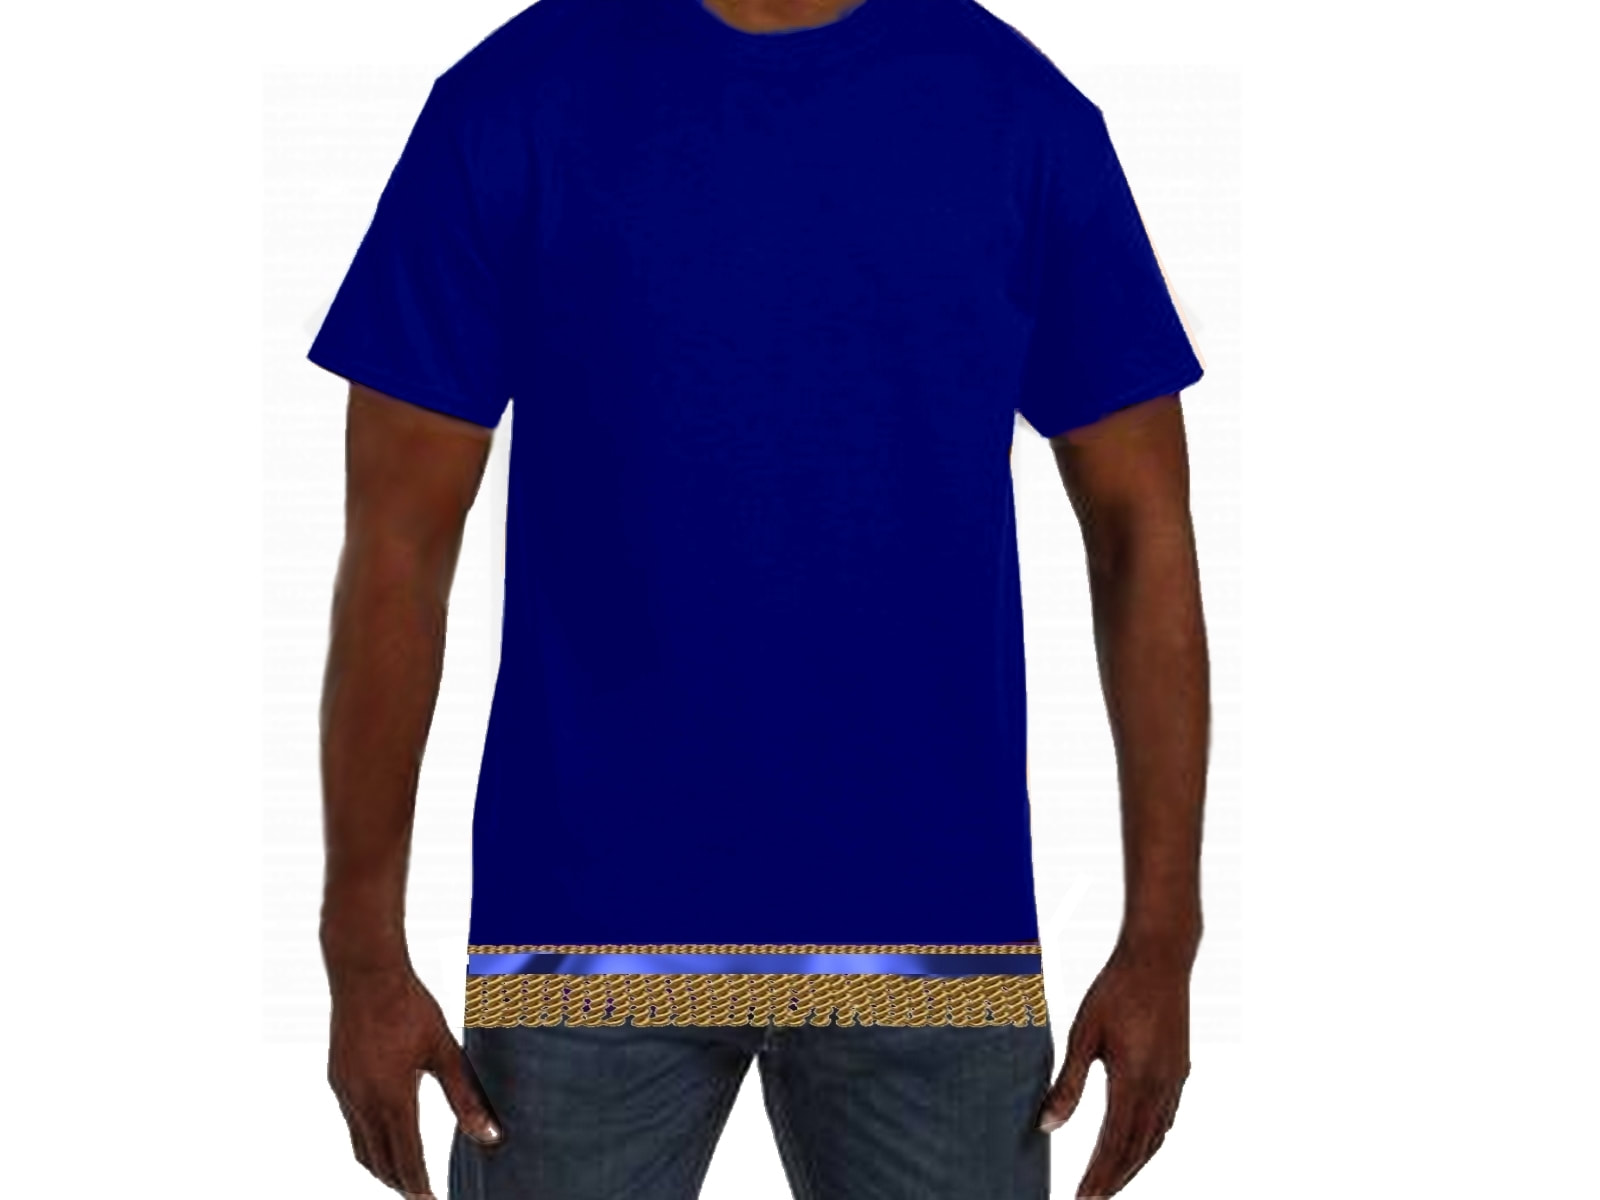 Made to Order Kleding Herenkleding Overhemden & T-shirts T-shirts Bundle of 4 Hebrew Israelite Shirts w/Fringes 